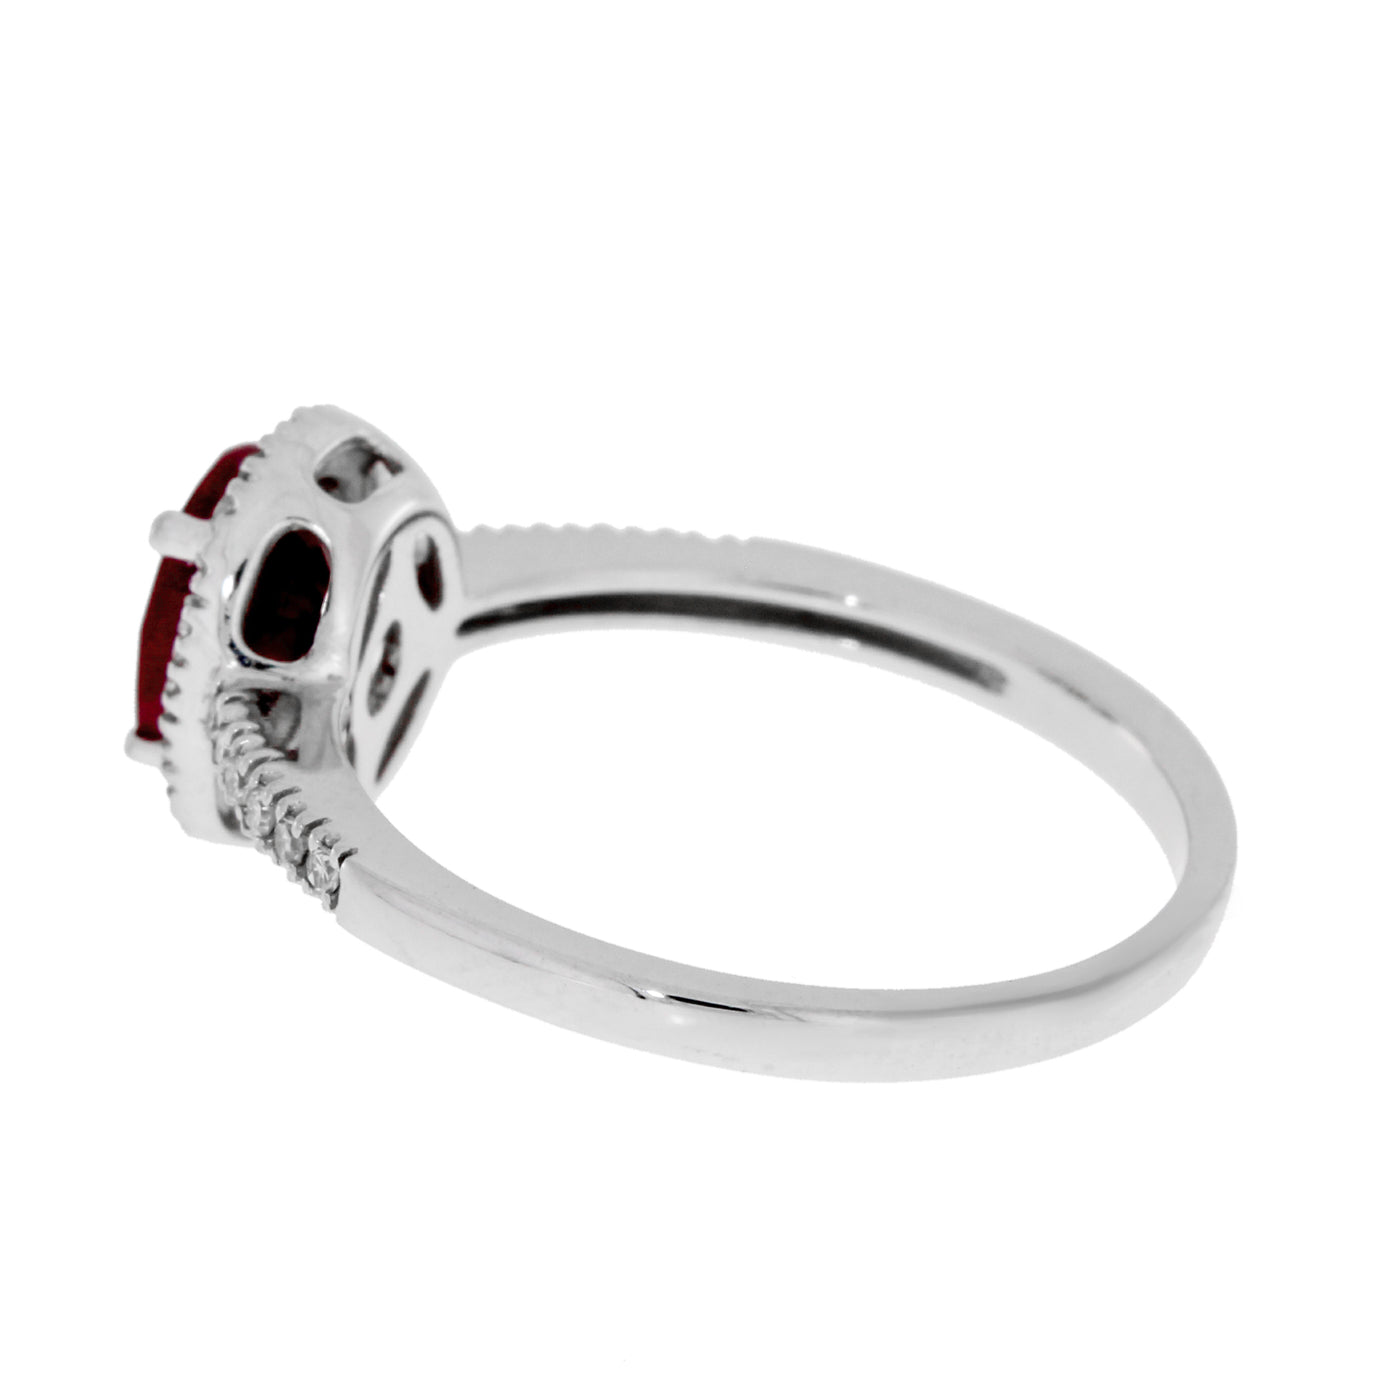 Genuine 1.14 Carat Large Ruby And White Diamond Luxury 14K White Gold Ring